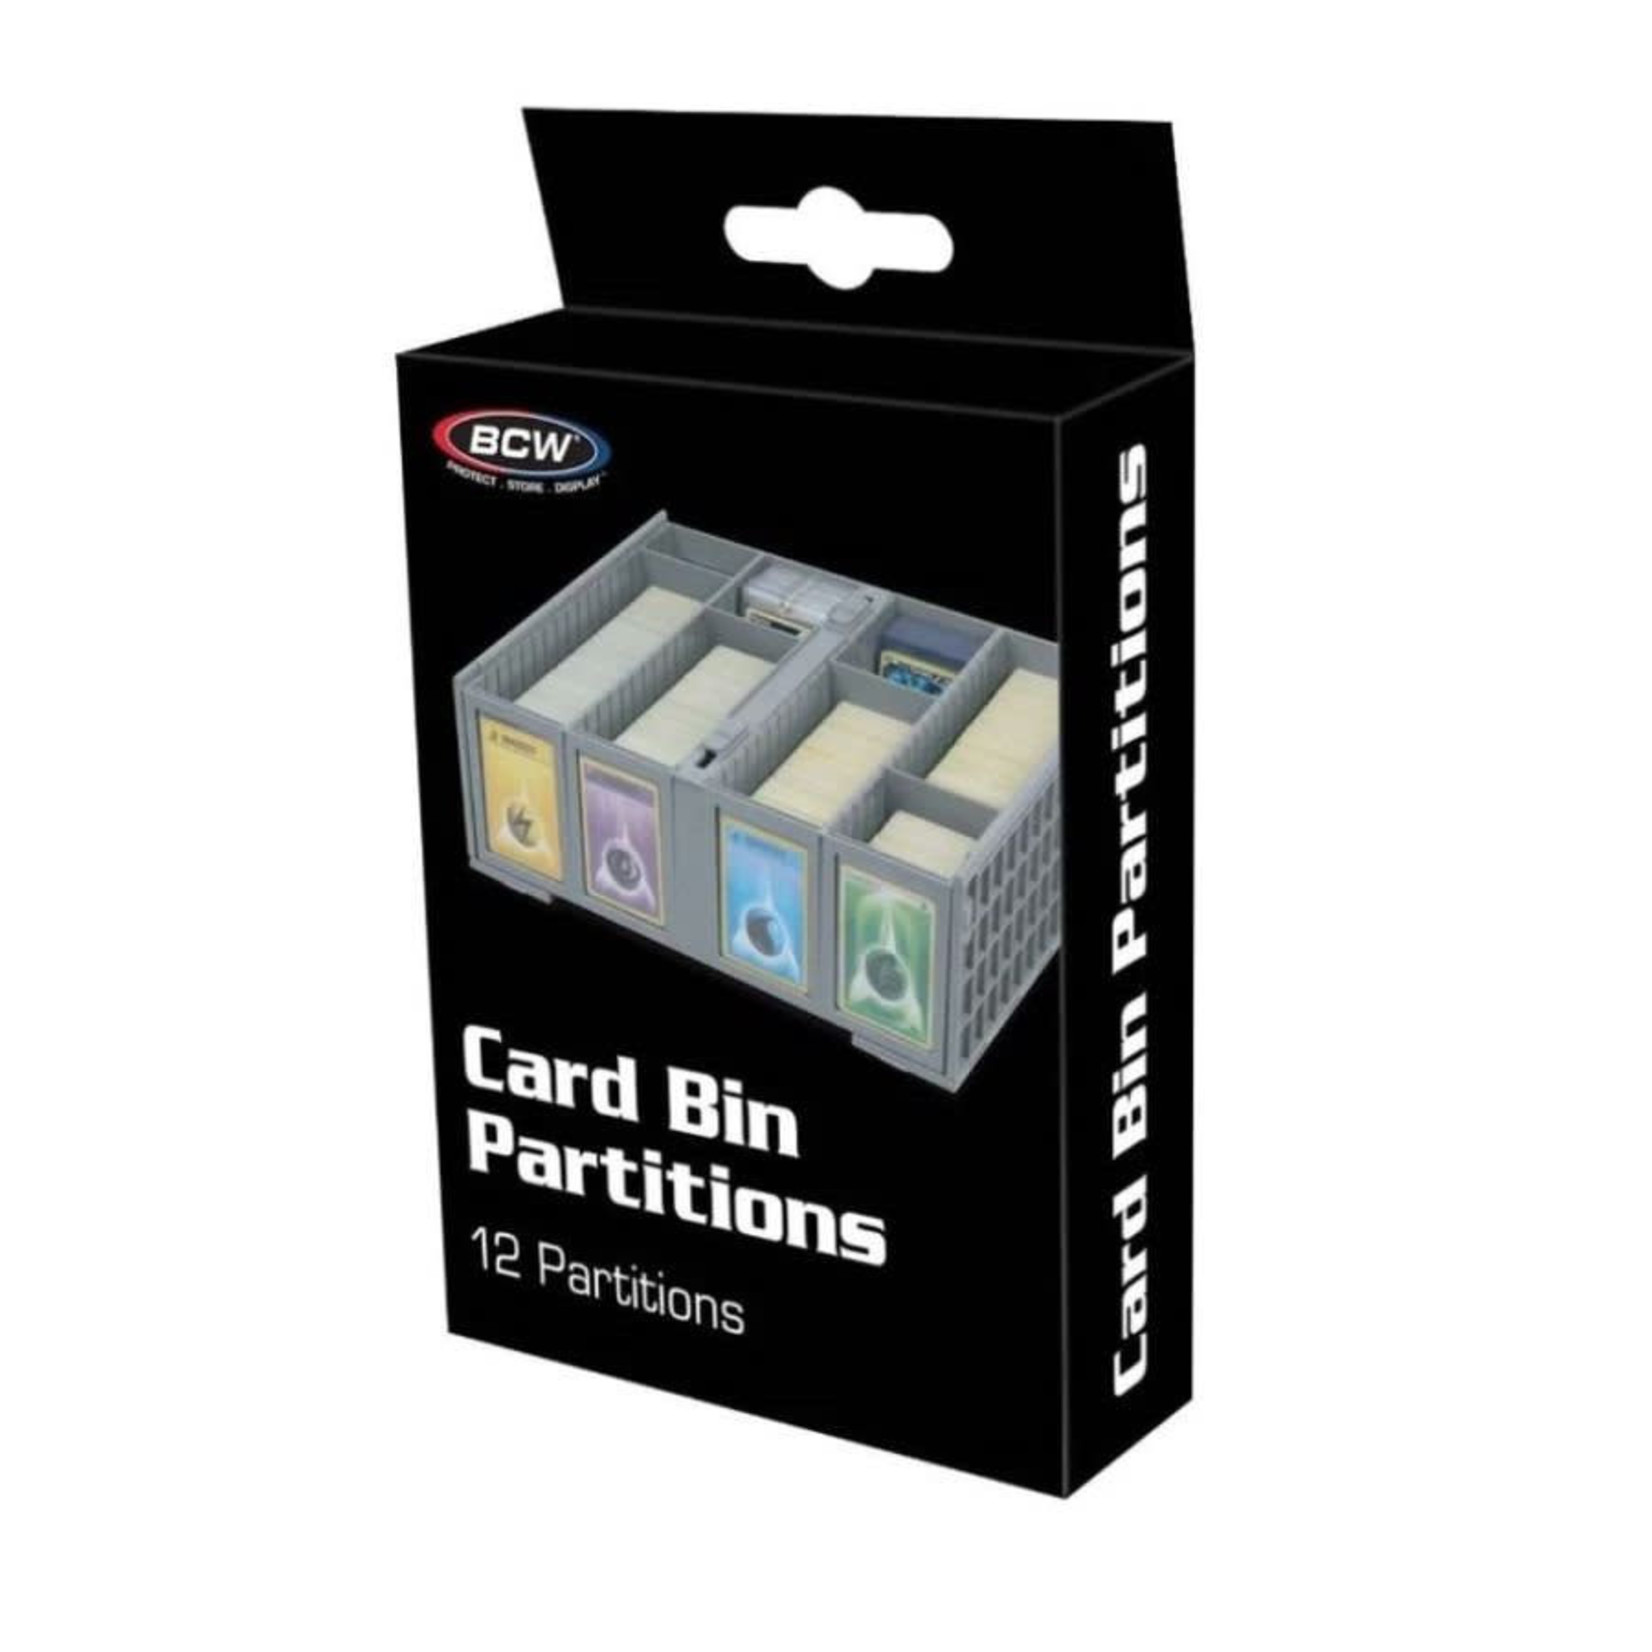 Plastic Card Bin Partitions- Gray (12)